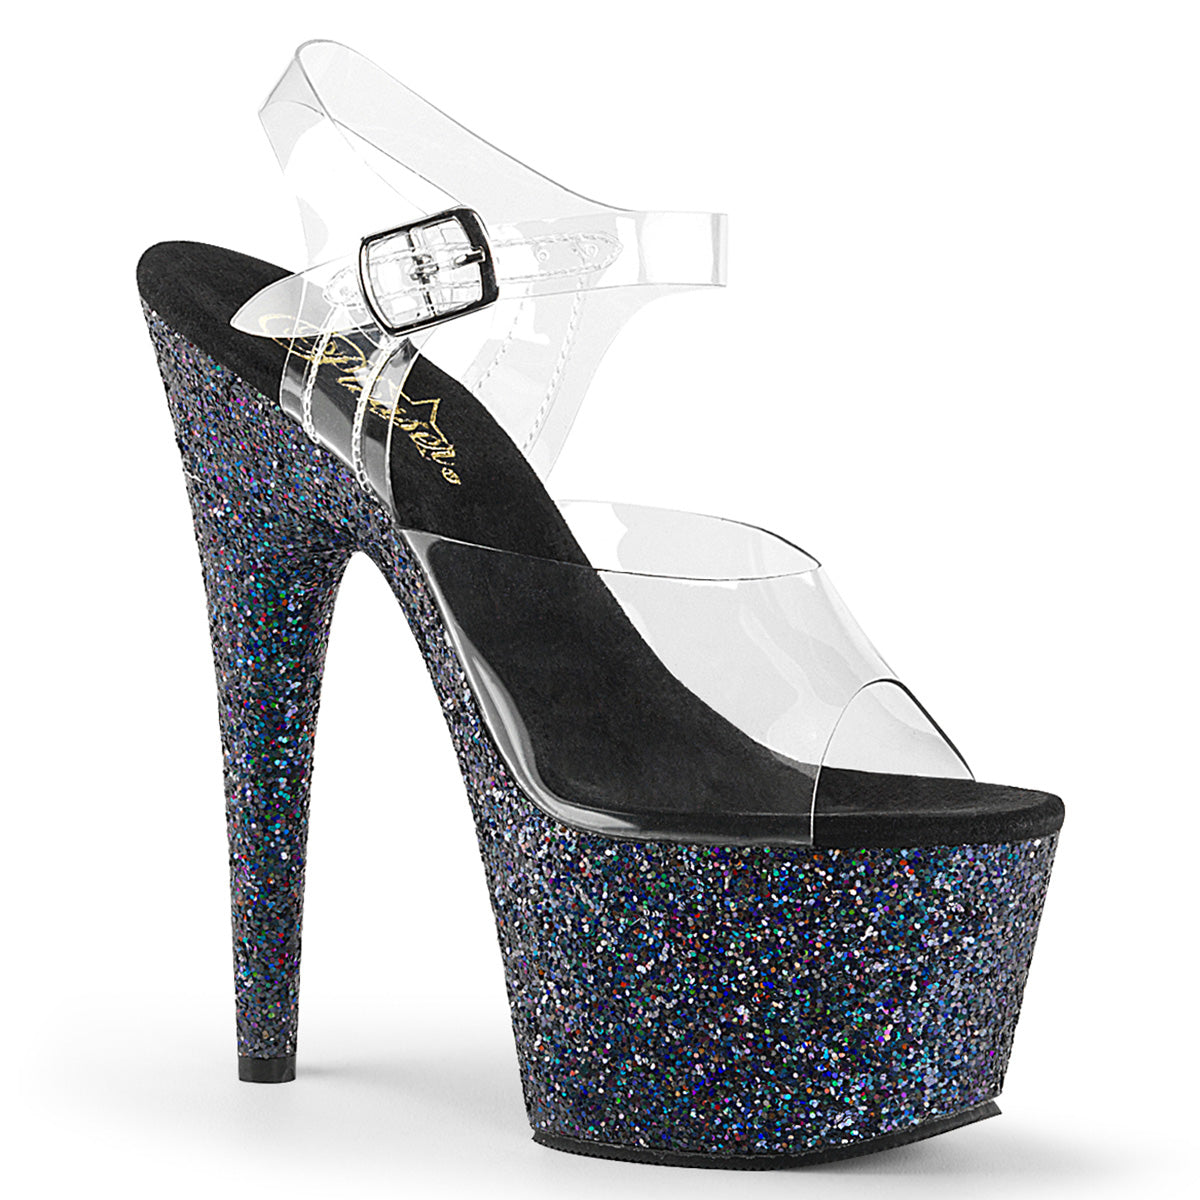 ADORE-708LG Pleaser 7" Heel Black Glitter Platform Exotic Dancing Sandals